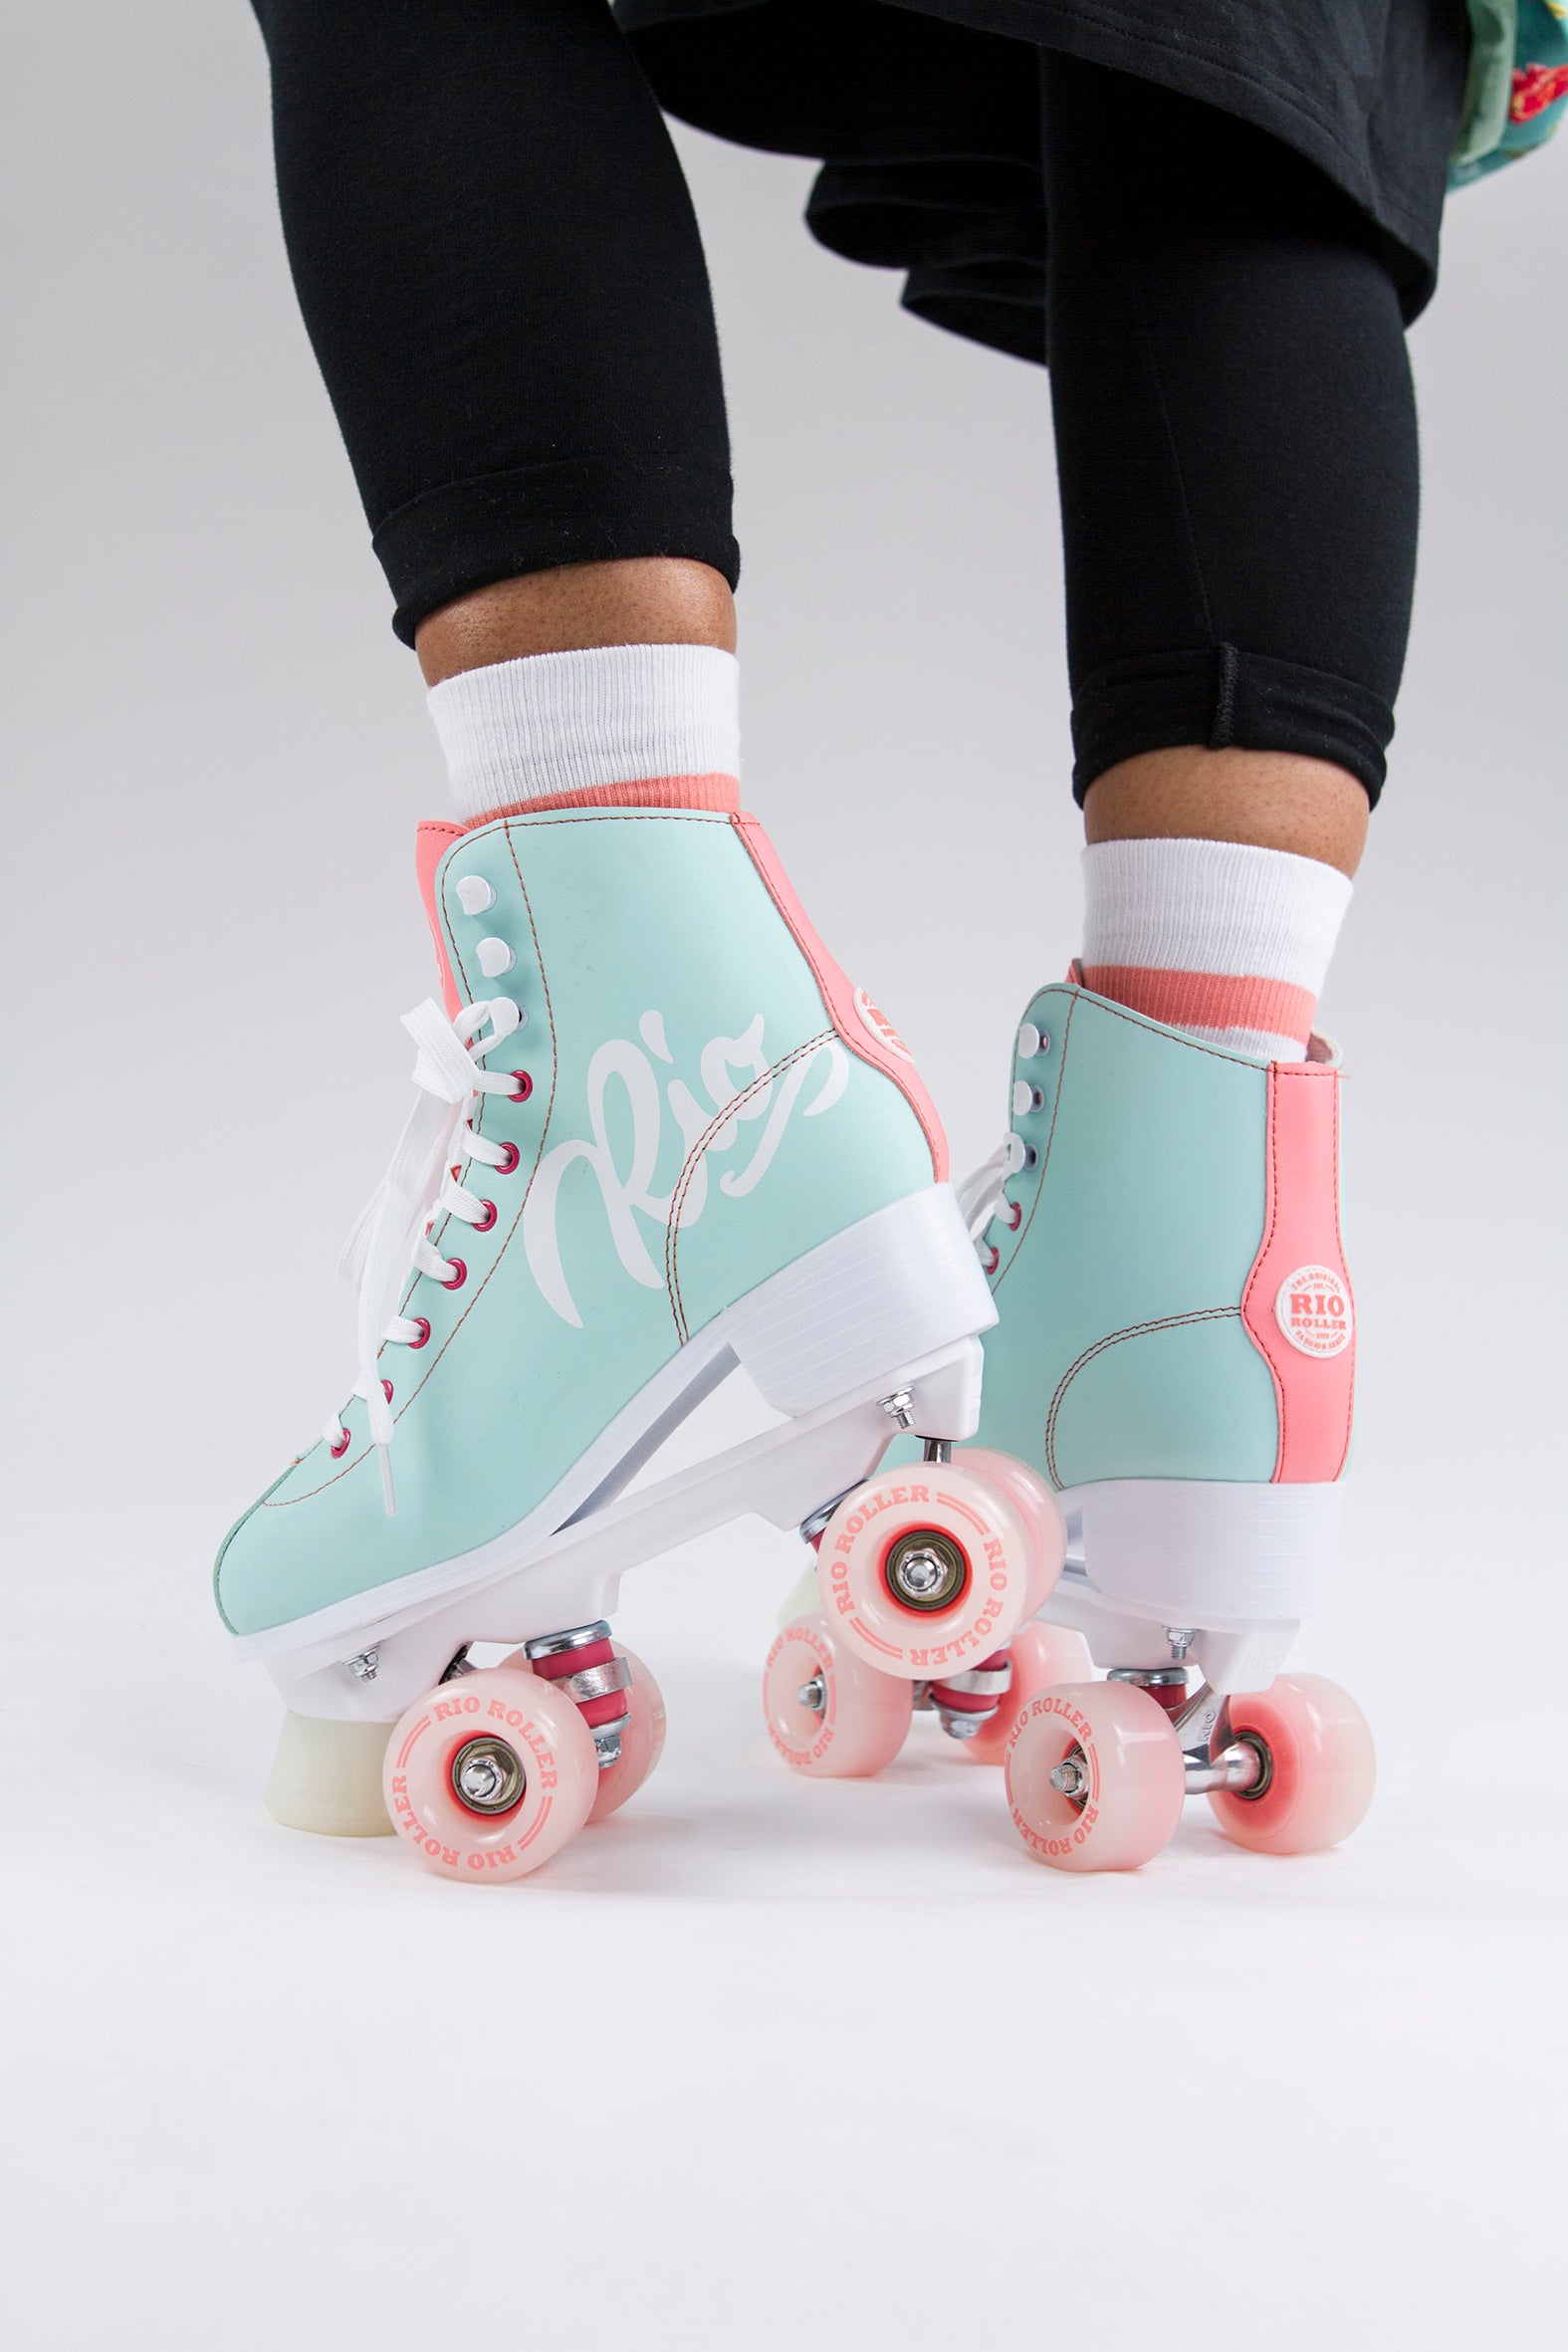 Rio Roller Script Quad Roller Skates - Teal/Coral – Momma Trucker Skates